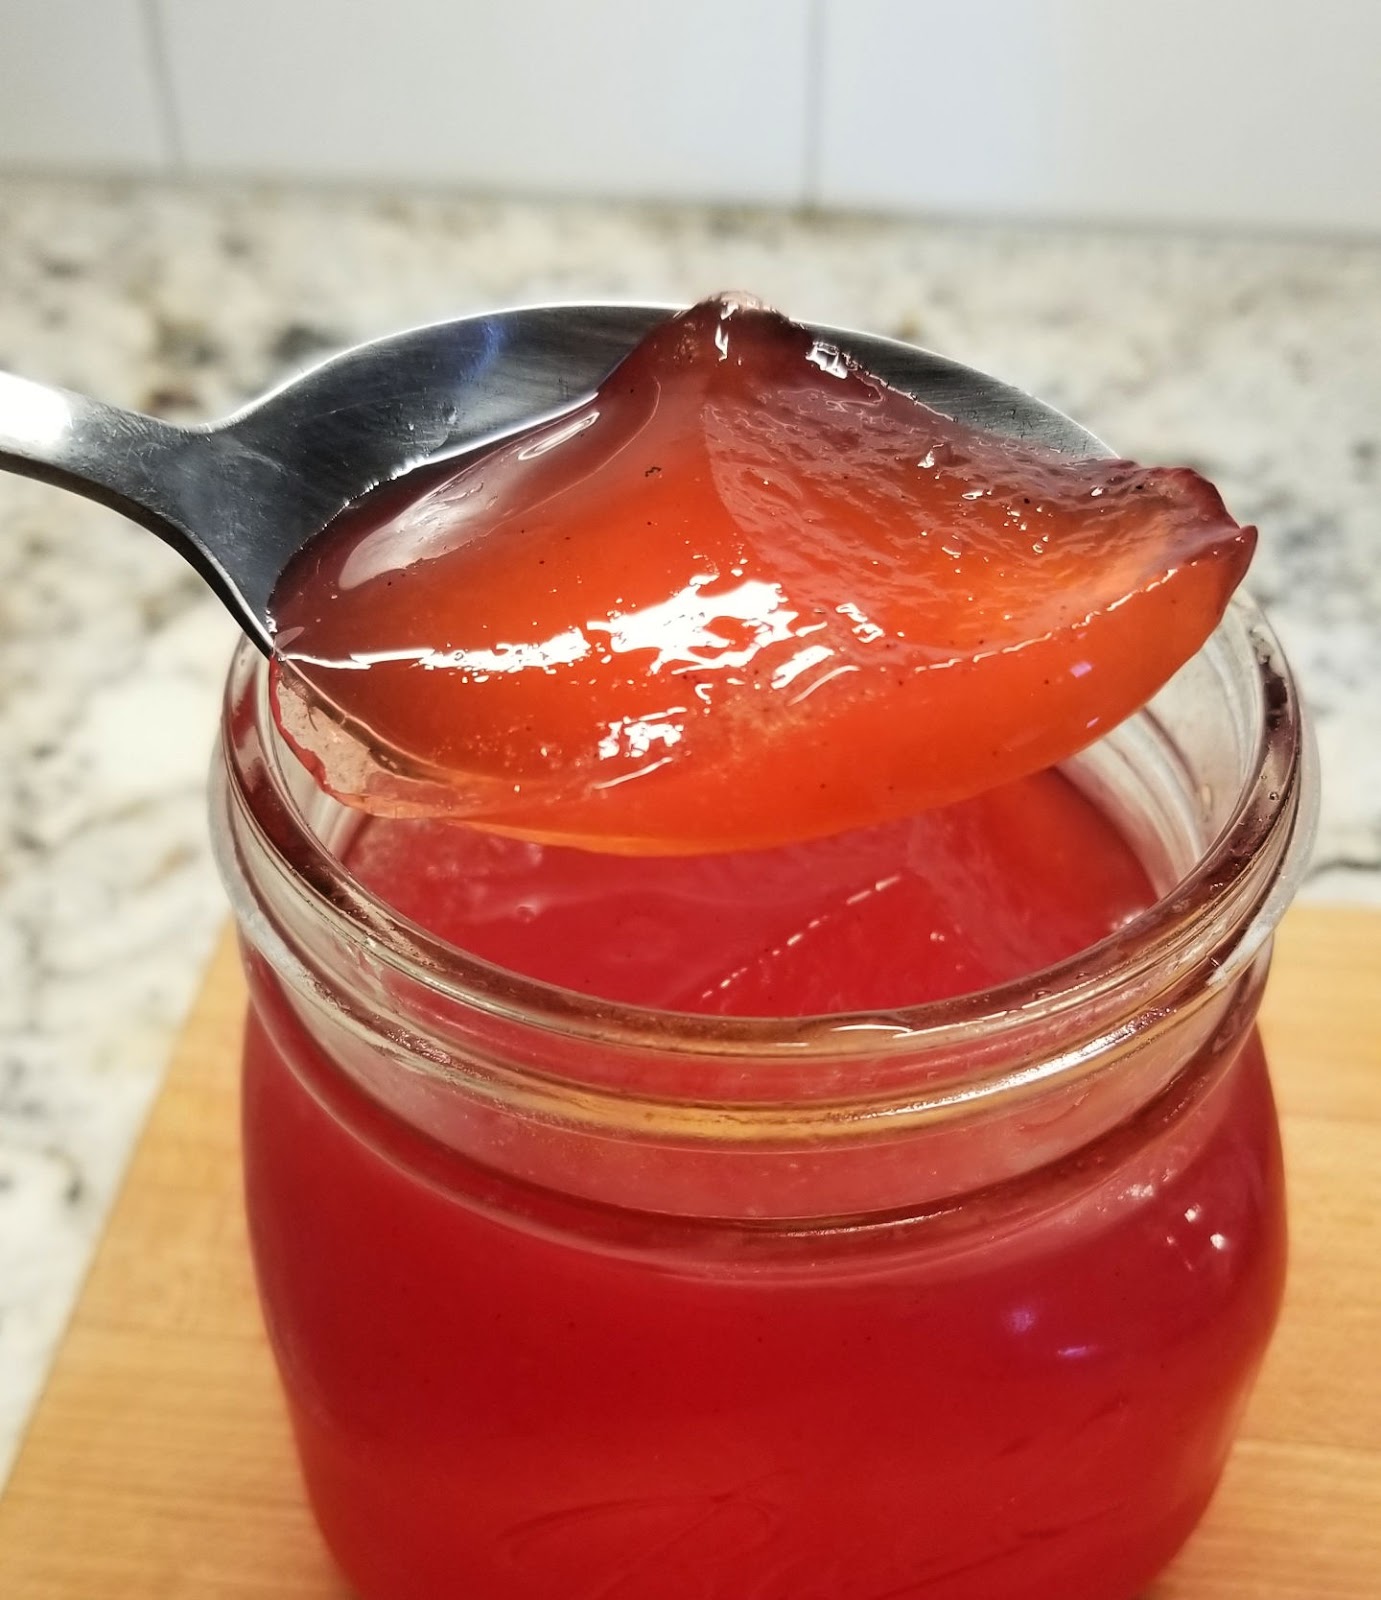 Crab apple jelly recipe